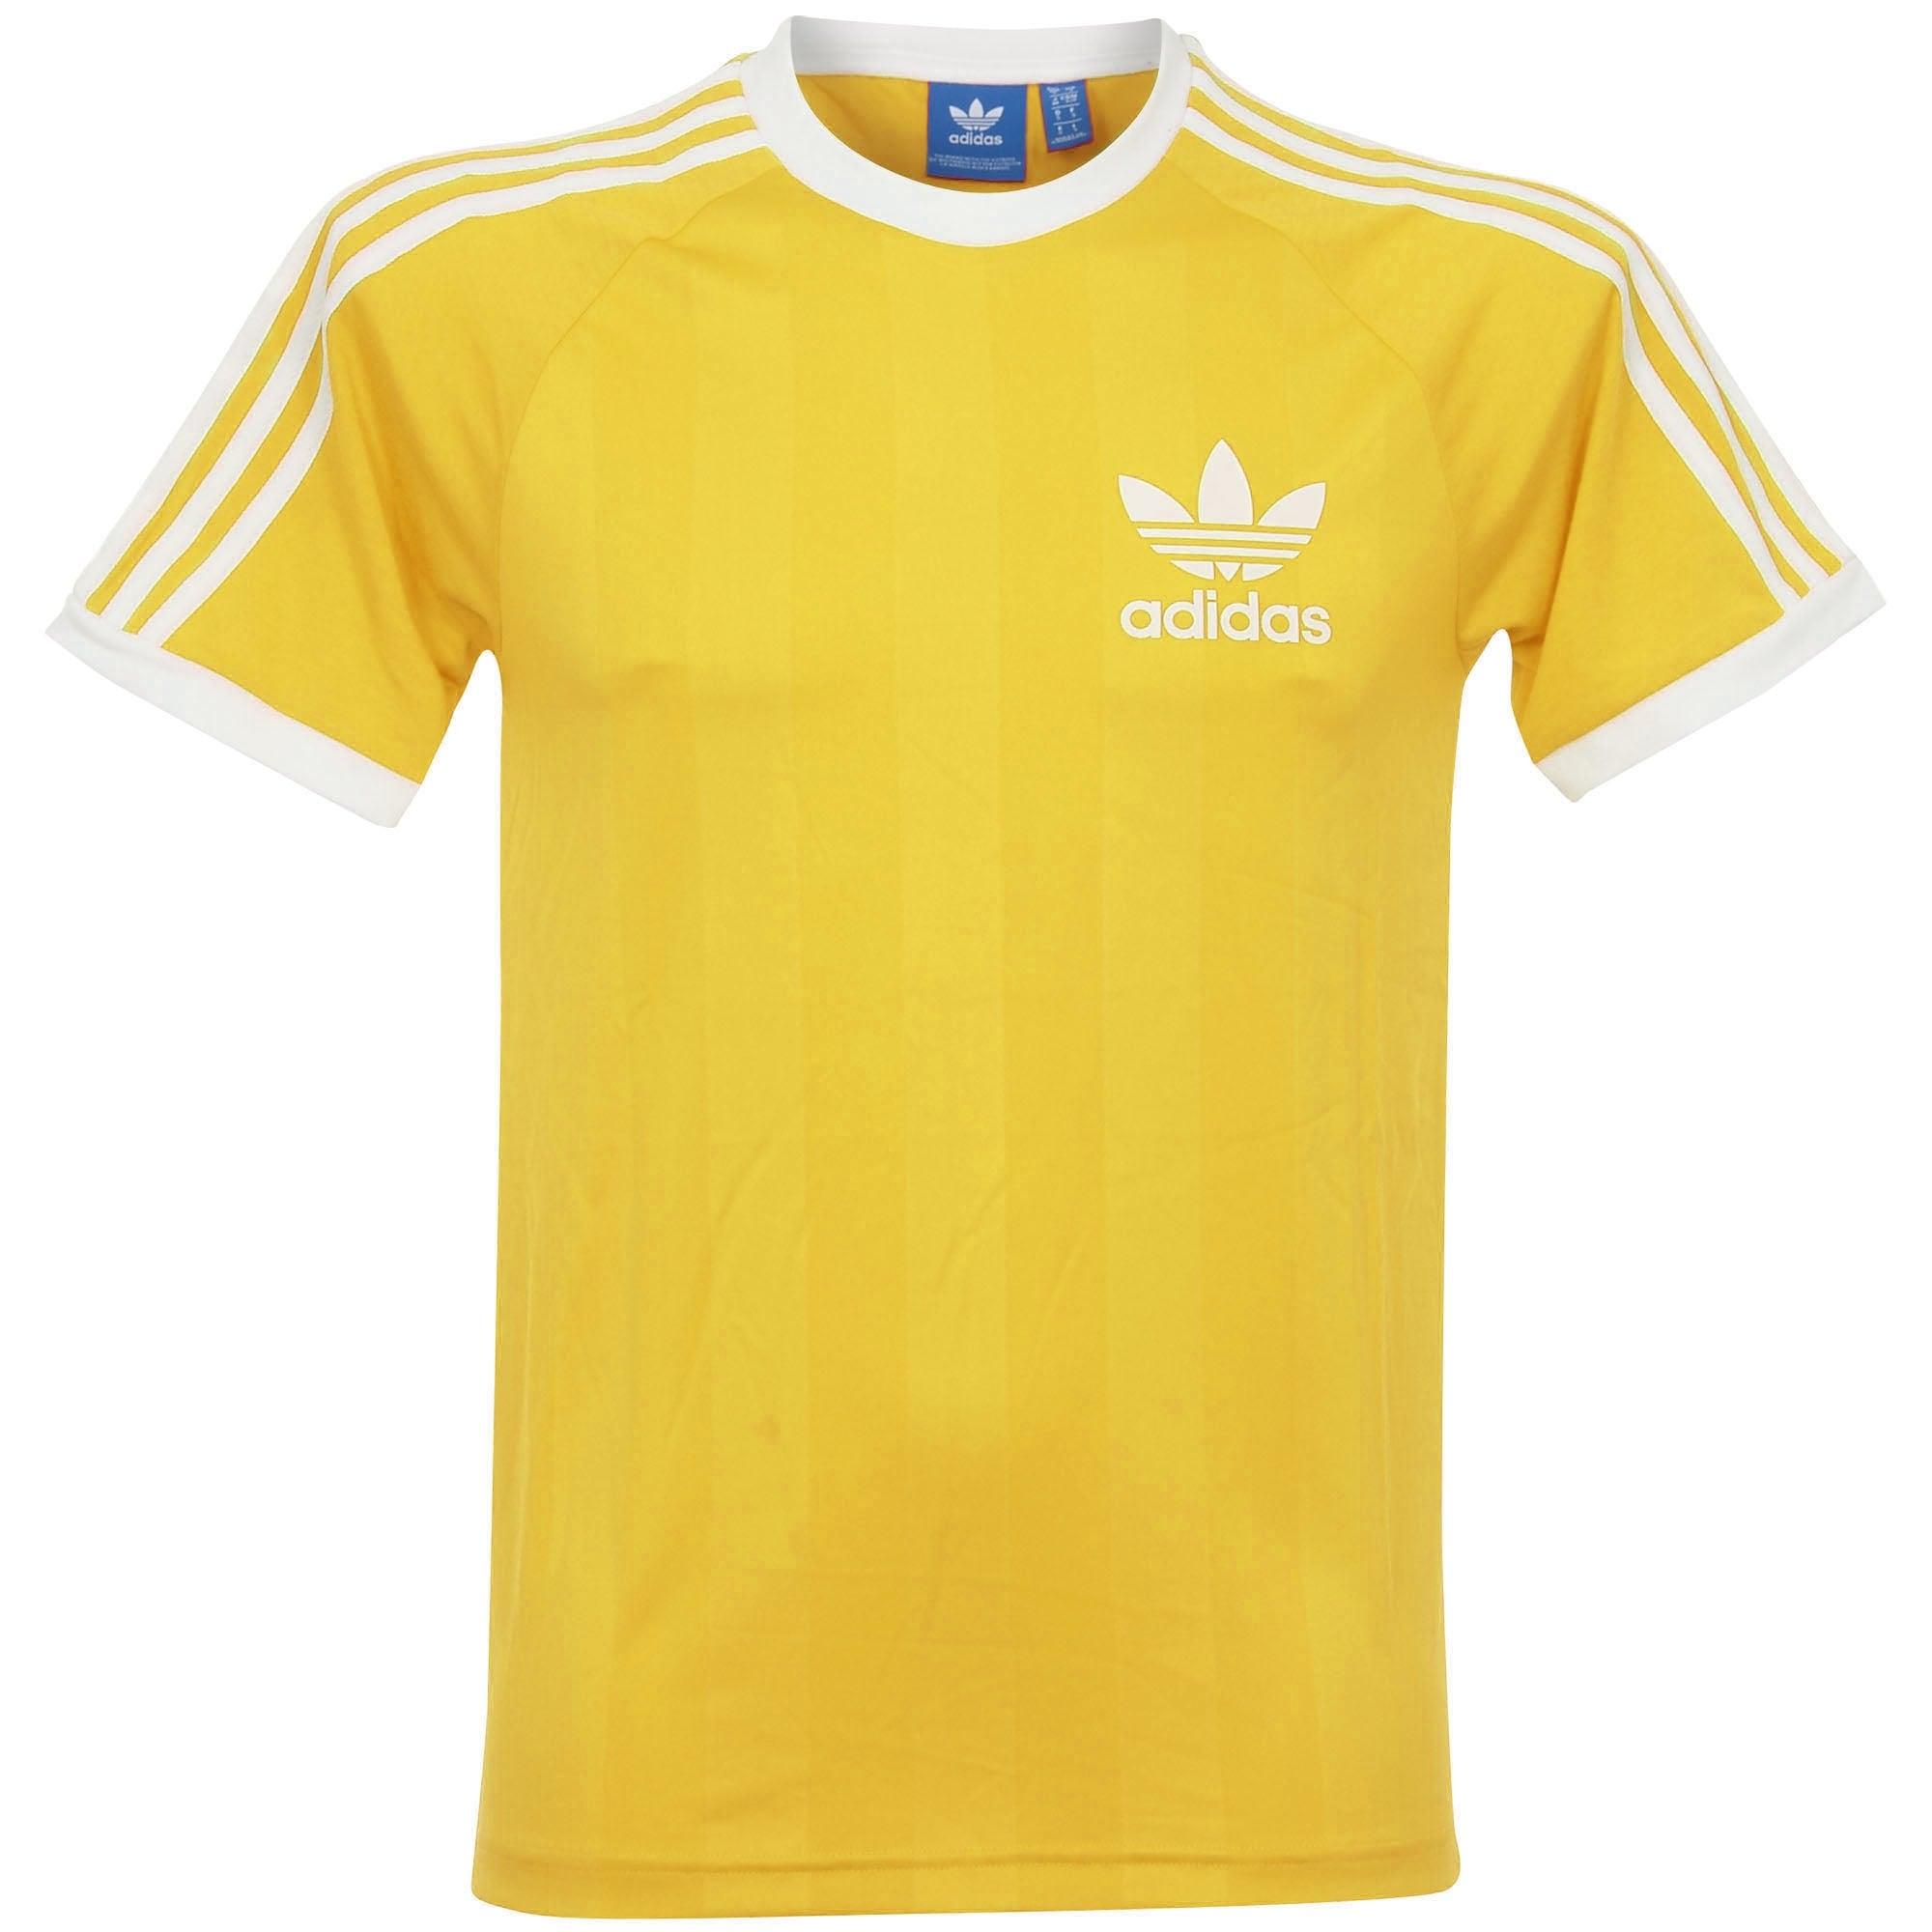 Lyst - Adidas Originals Adidas Clfn Tee Yellow T-Shirt Cf5305 in Yellow ...